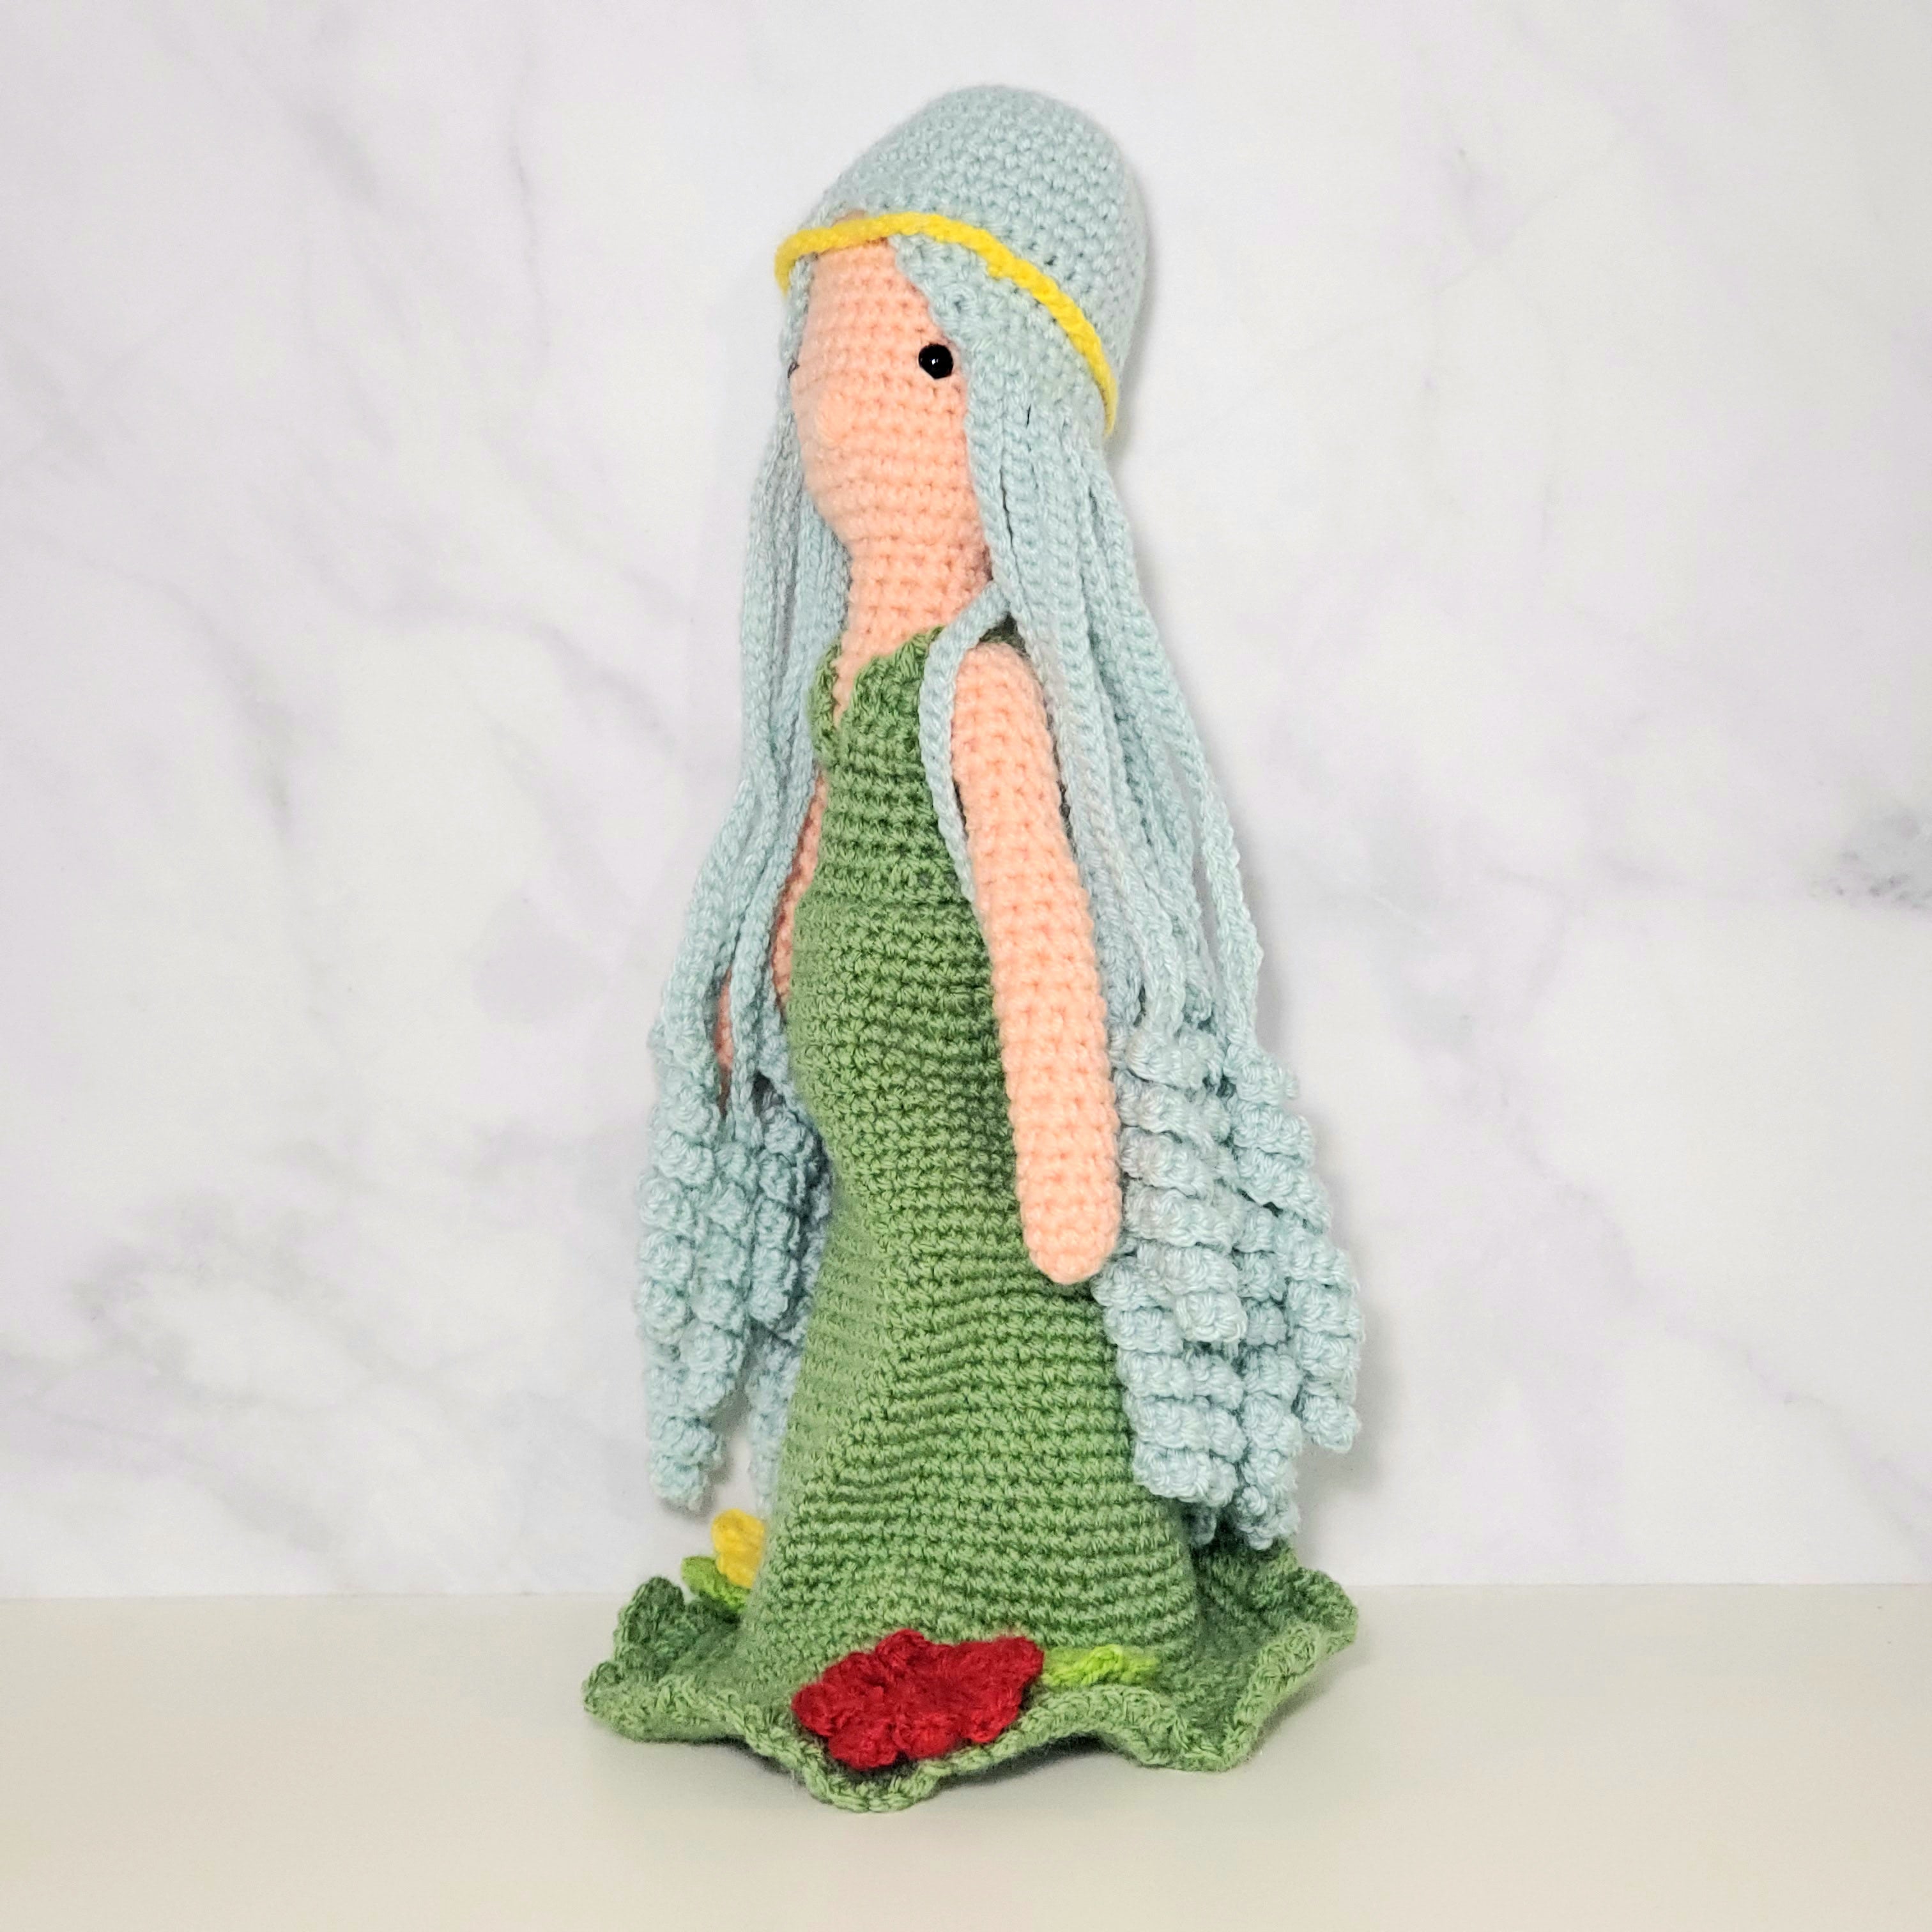 Crochet Plush Toy - Water Nymph